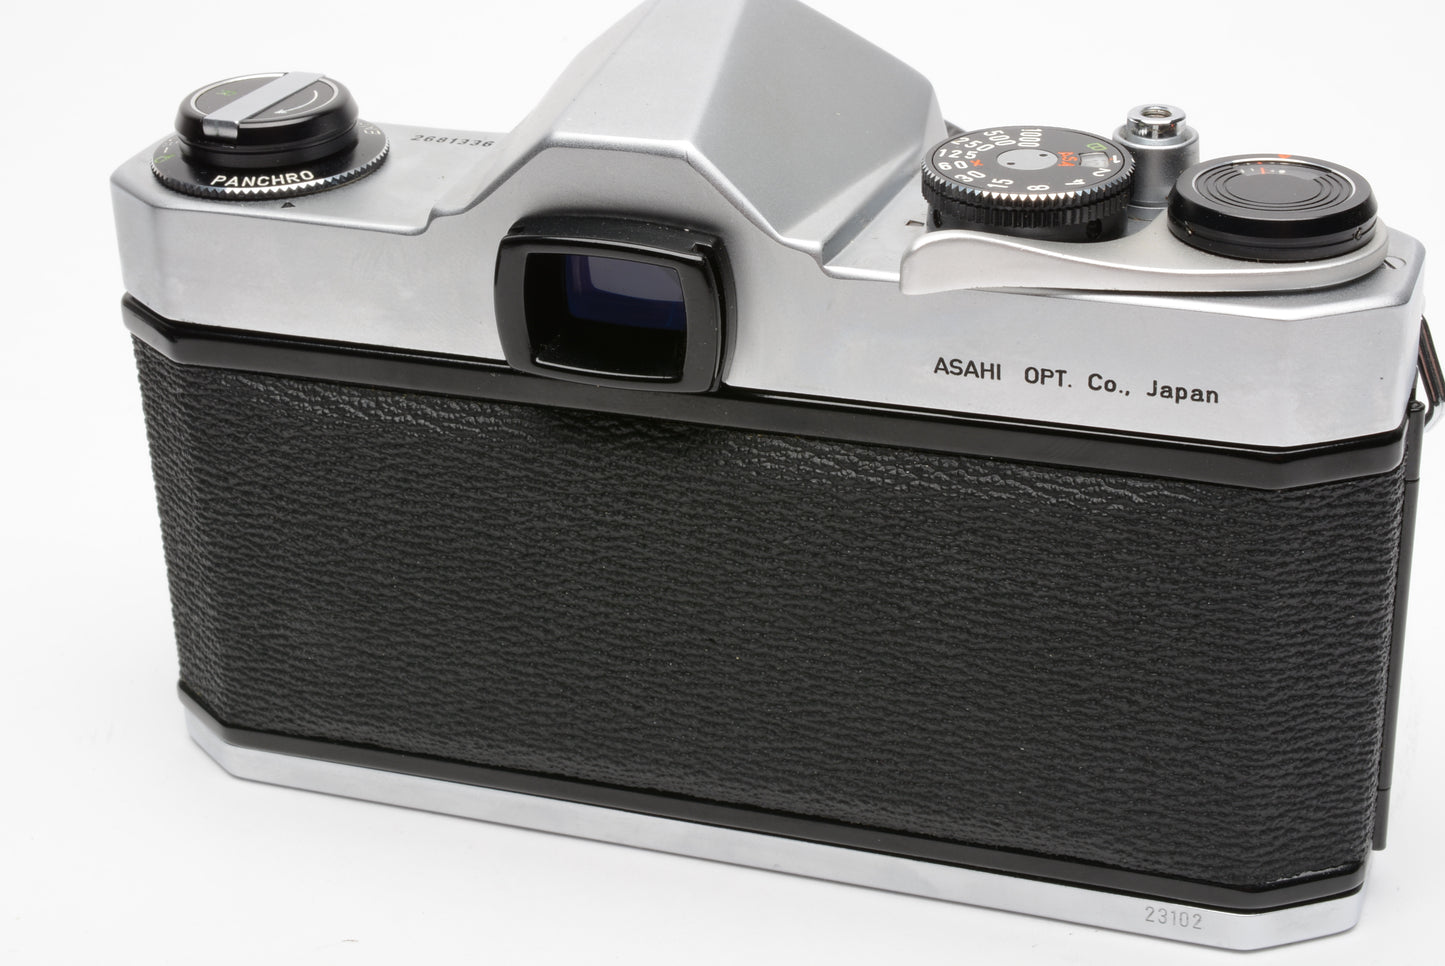 Pentax Spotmatic SP chrome 35mm SLR w/50mm F1.7, case, cap, strap, new seals, nice!